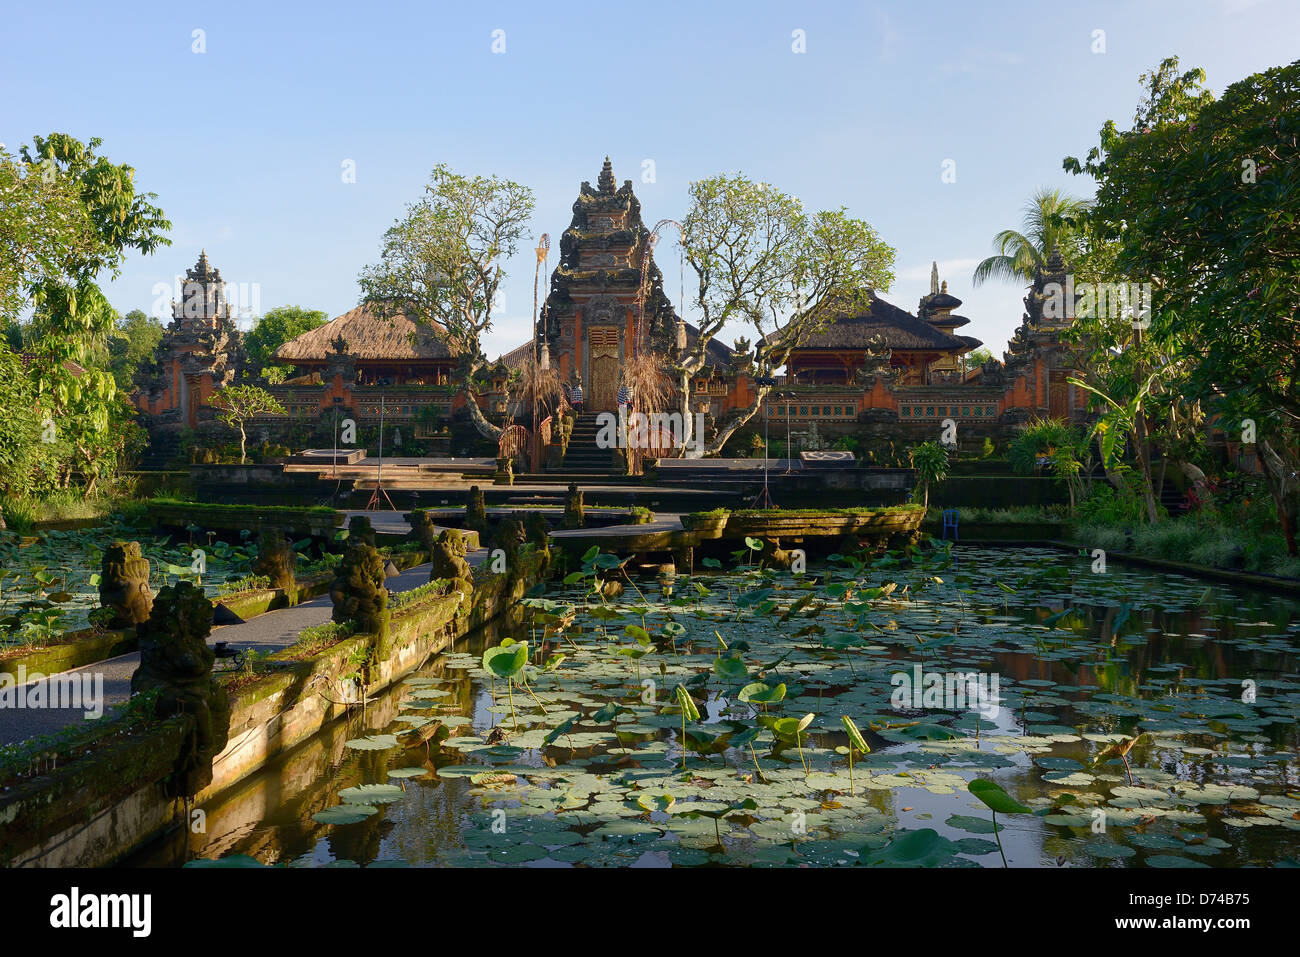 Indonesien, Bali, Ubud, Zierteich des Tempels Pura Taman Saraswati Stockfoto